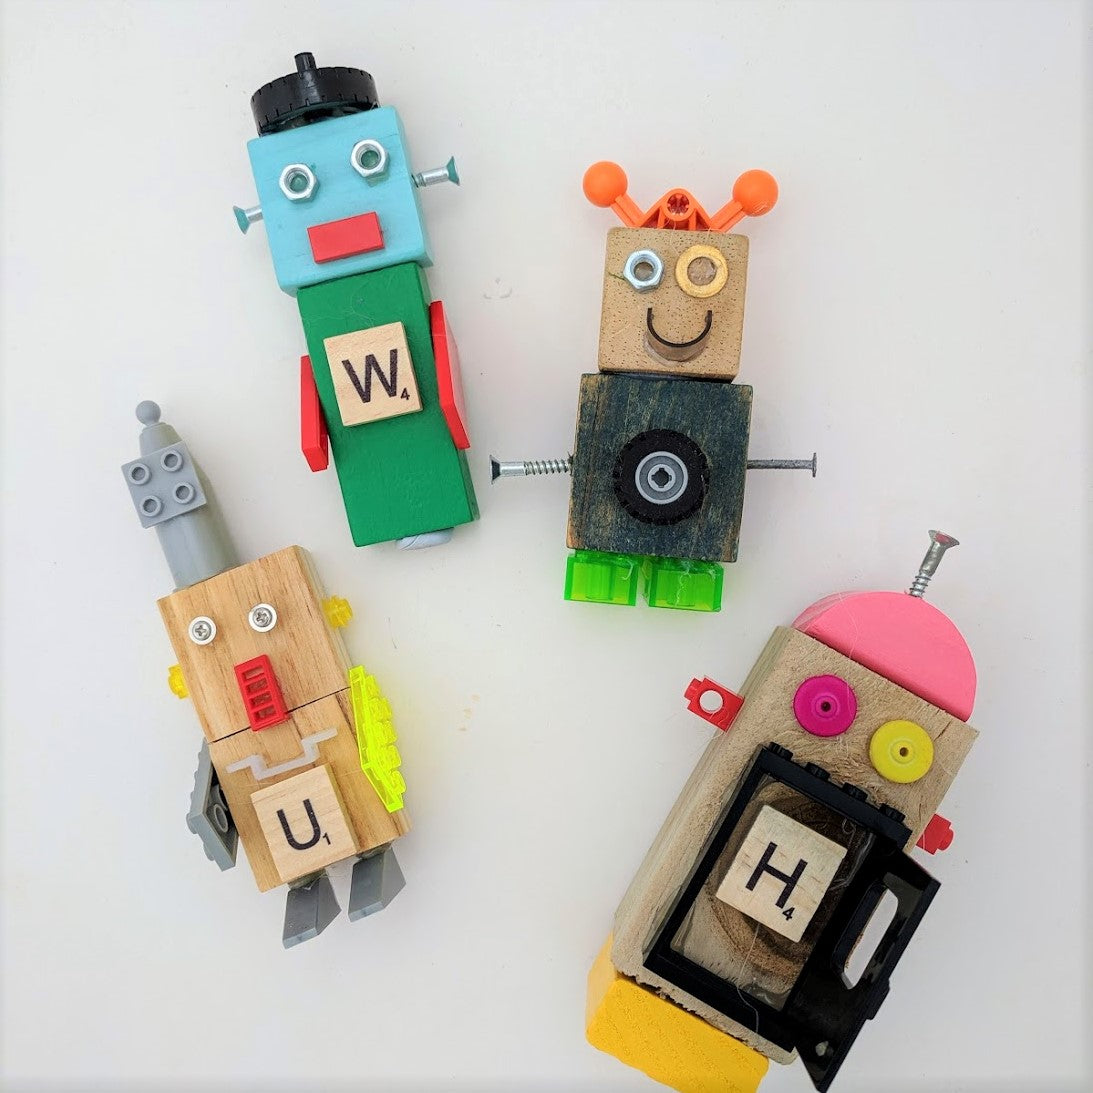 Kids craft ideas, make your own robot family craft kit